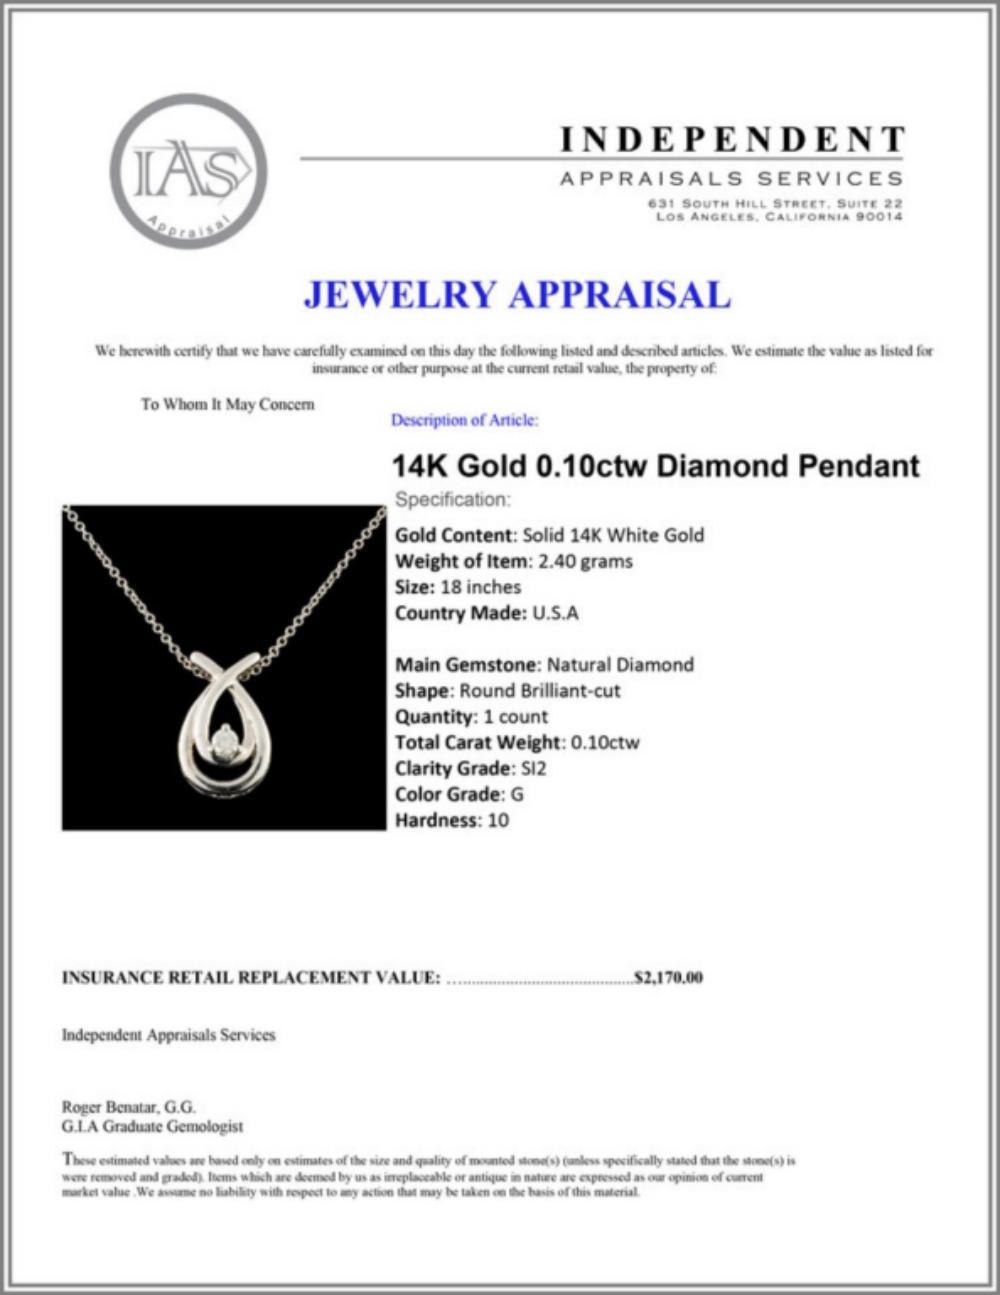 14K Gold 0.10ctw Diamond Pendant